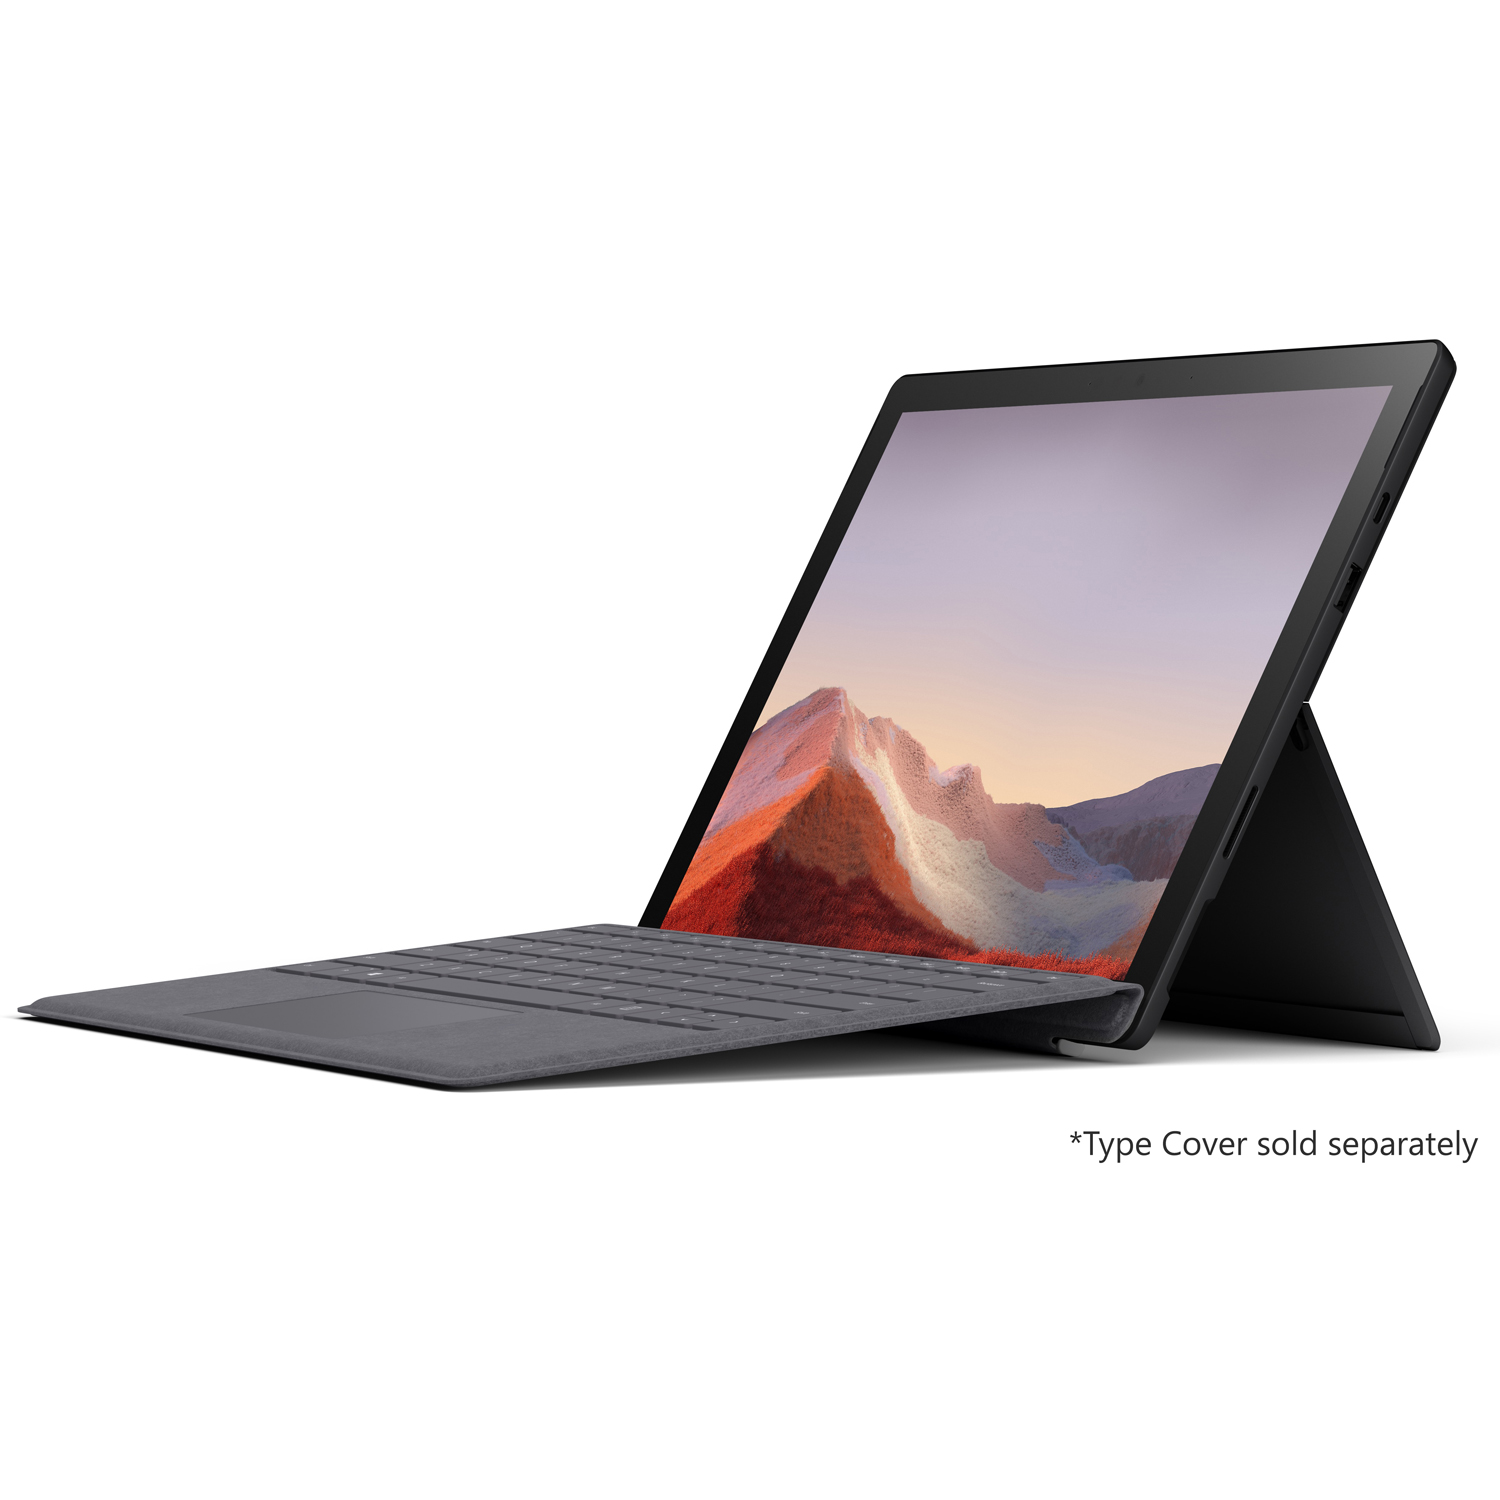 Microsoft VAT-00016 Surface Pro 7 12.3 Touch Intel i7-1065G7 16GB 512GB, Black